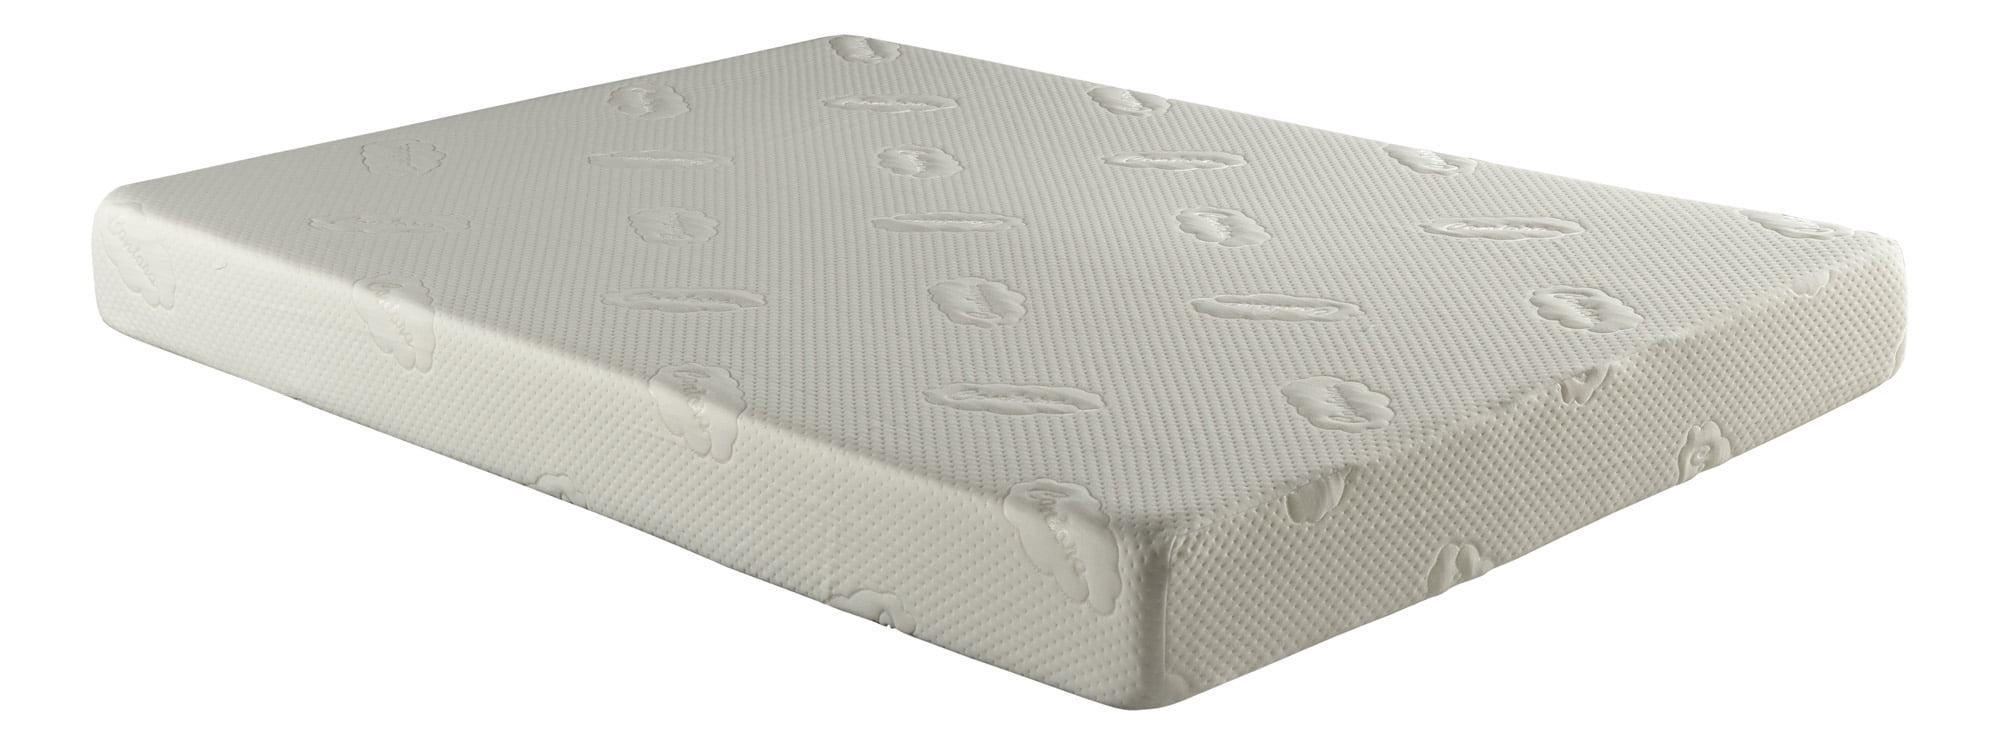 7-inch twin organic mattress